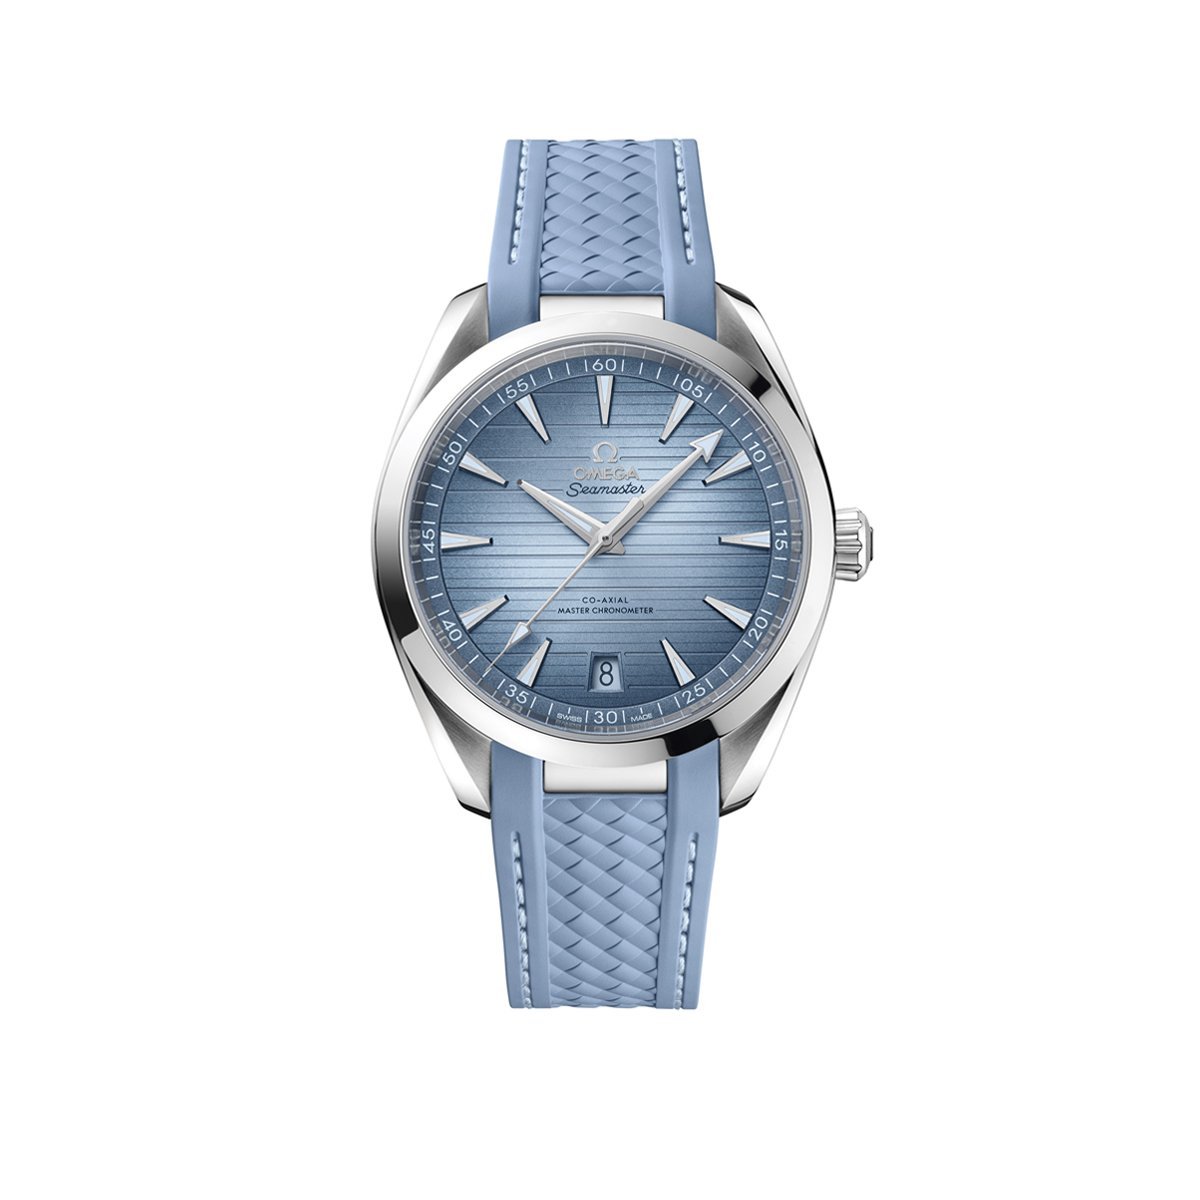 Seamaster Aqua Terra 150m Co-Axial Master Chronometer 41mm Watch